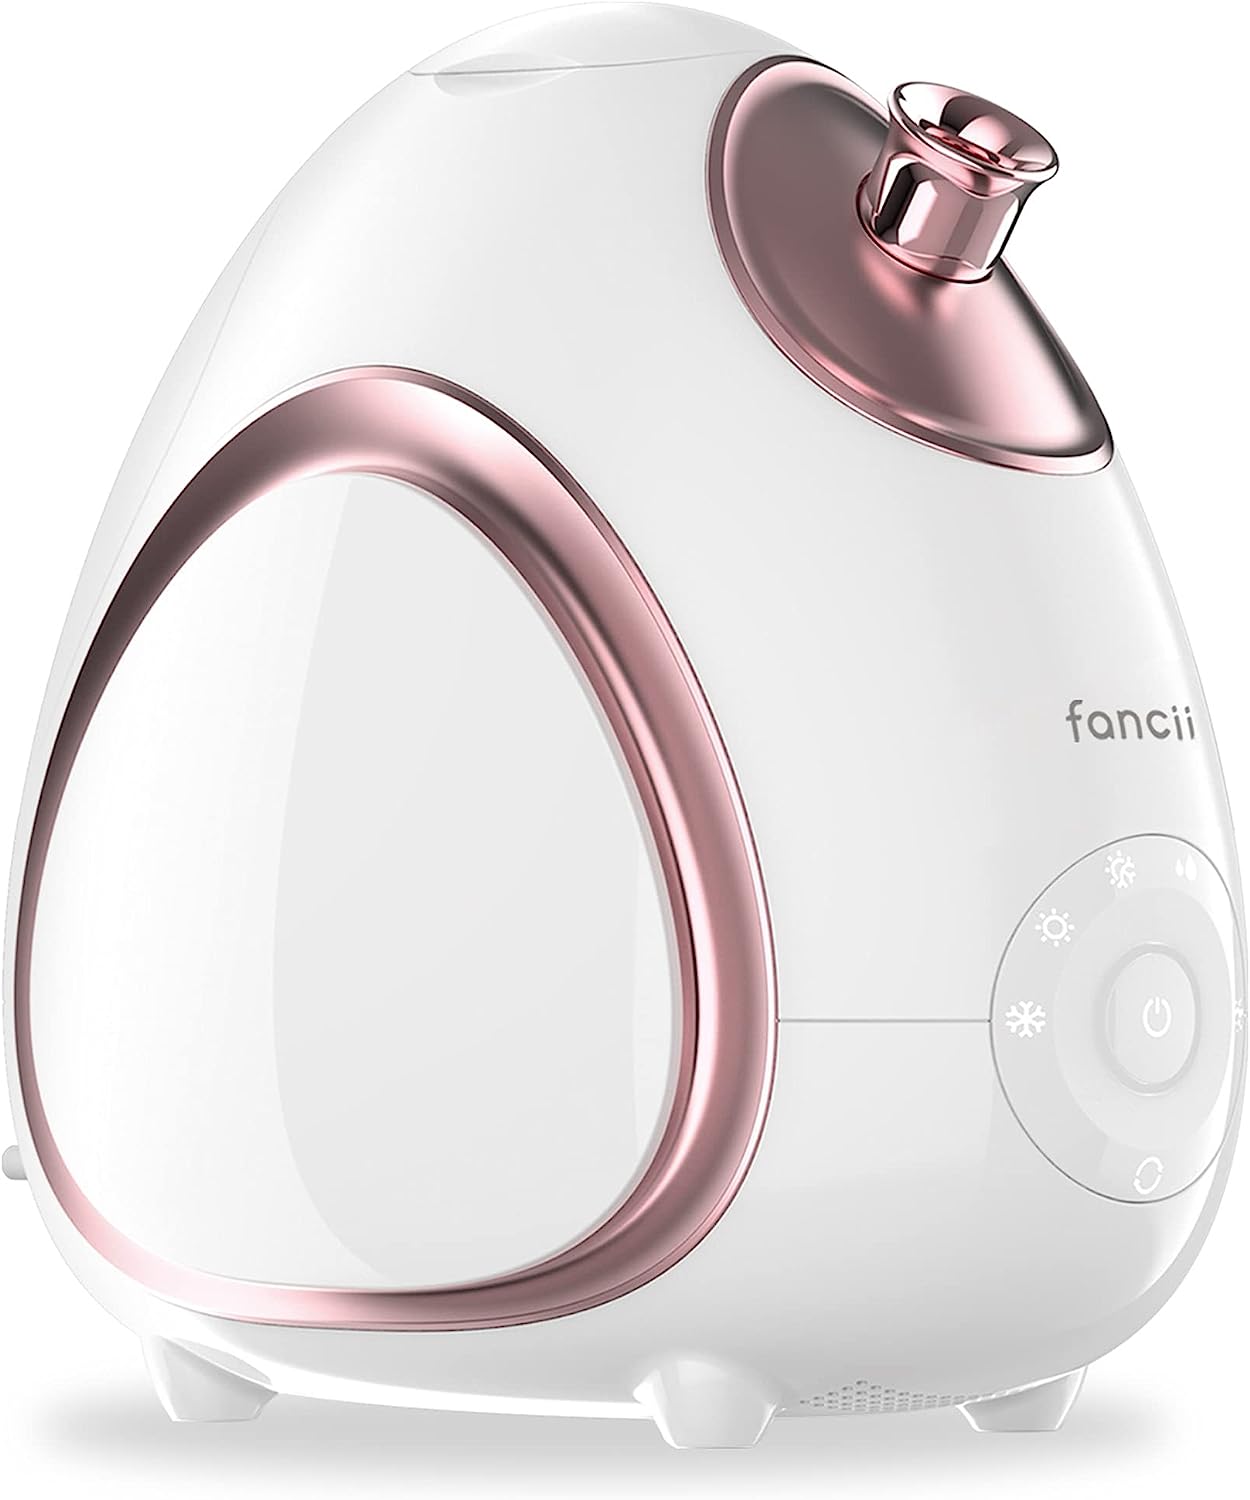 Fancii Nano Ionic Facial Steamer Hot & Cool